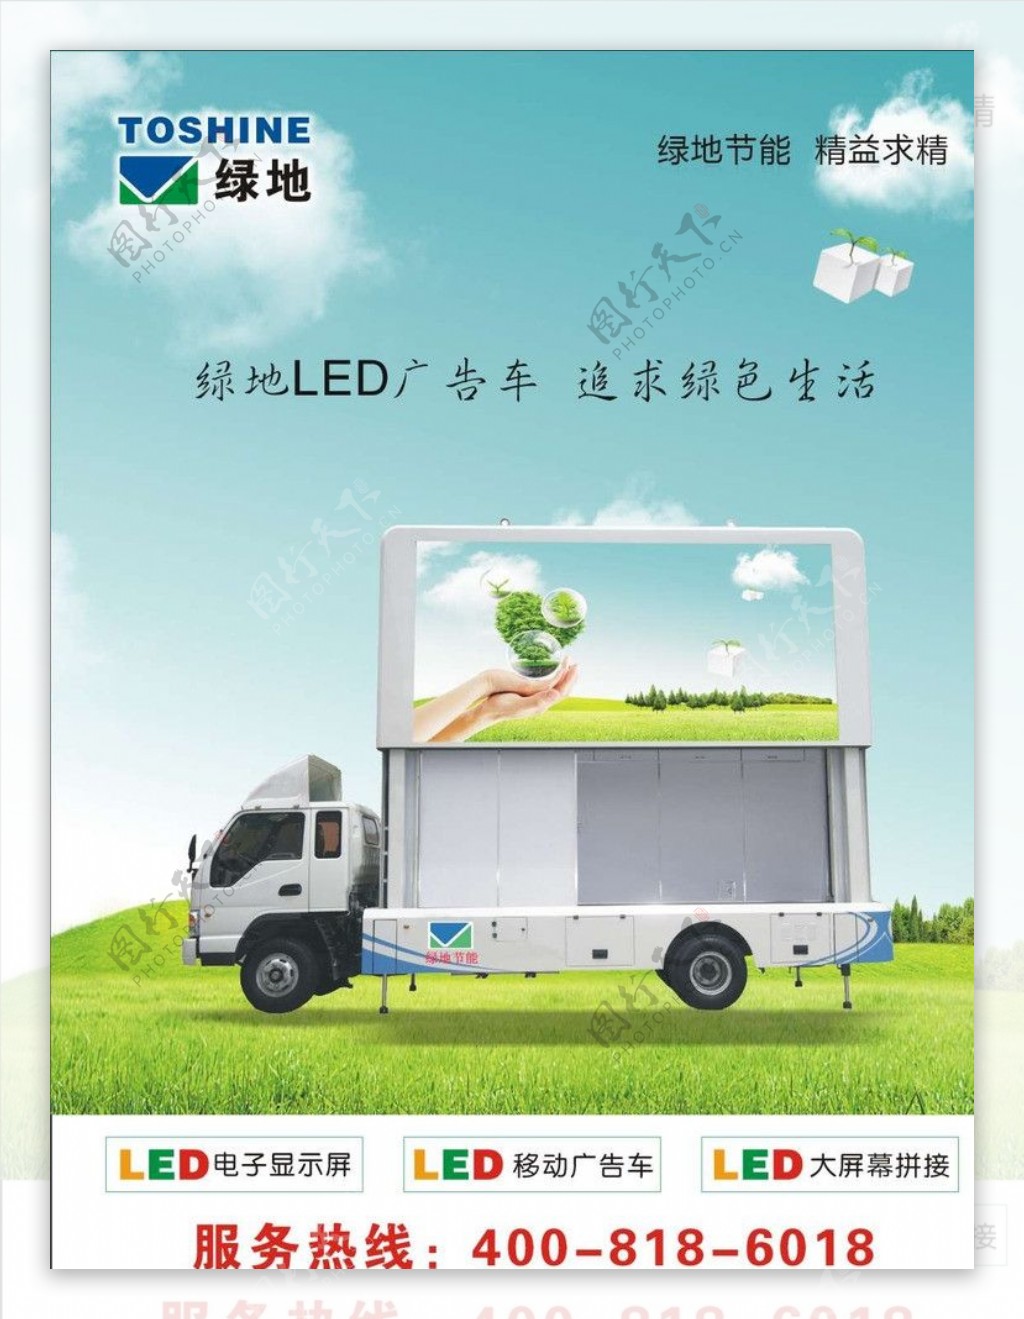 LED广告车绿色生活图片